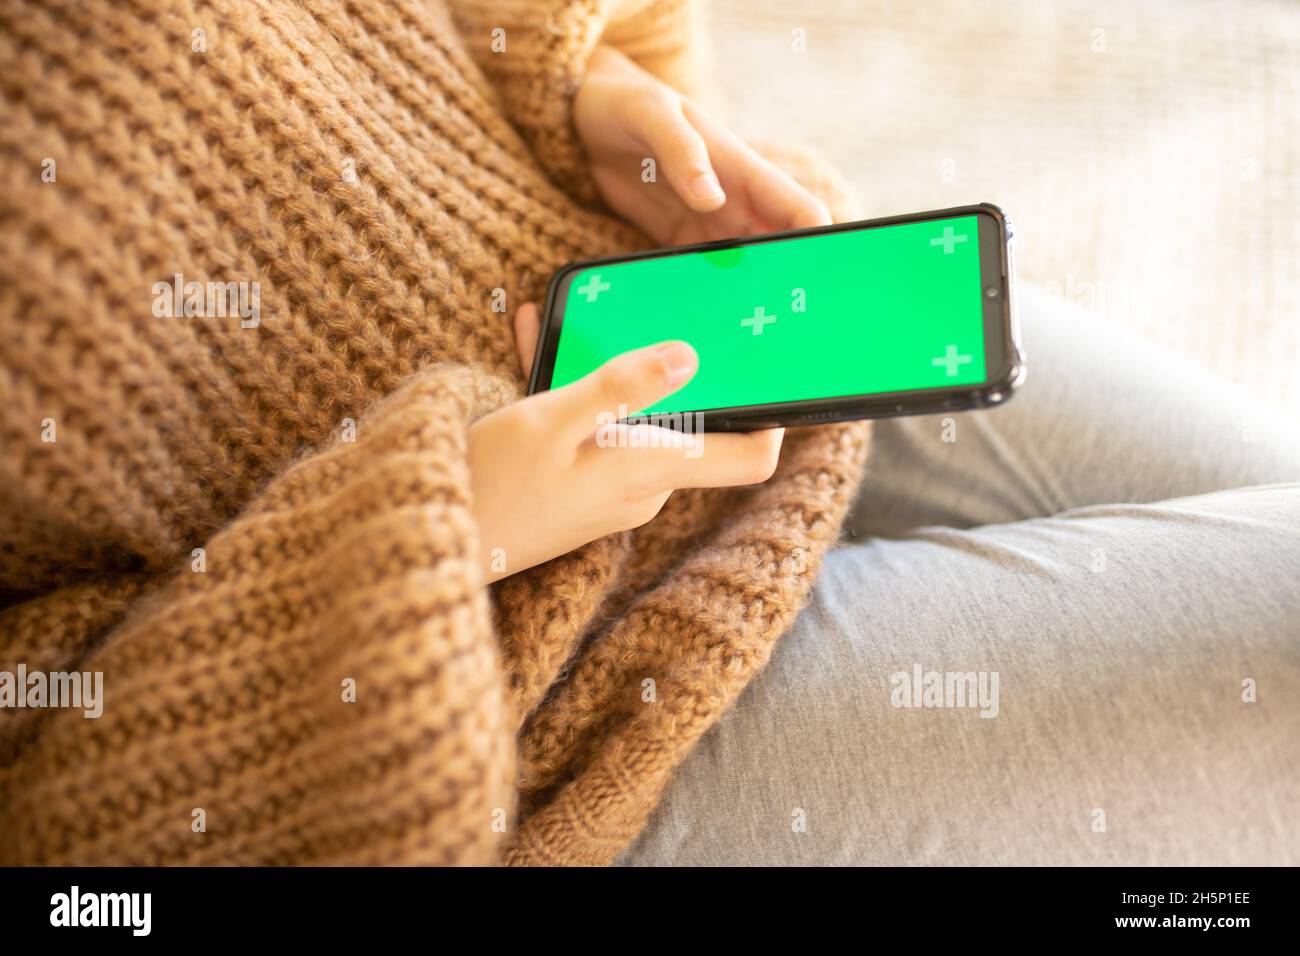 Girl Using Smartphone with chroma key screen Stock Photo